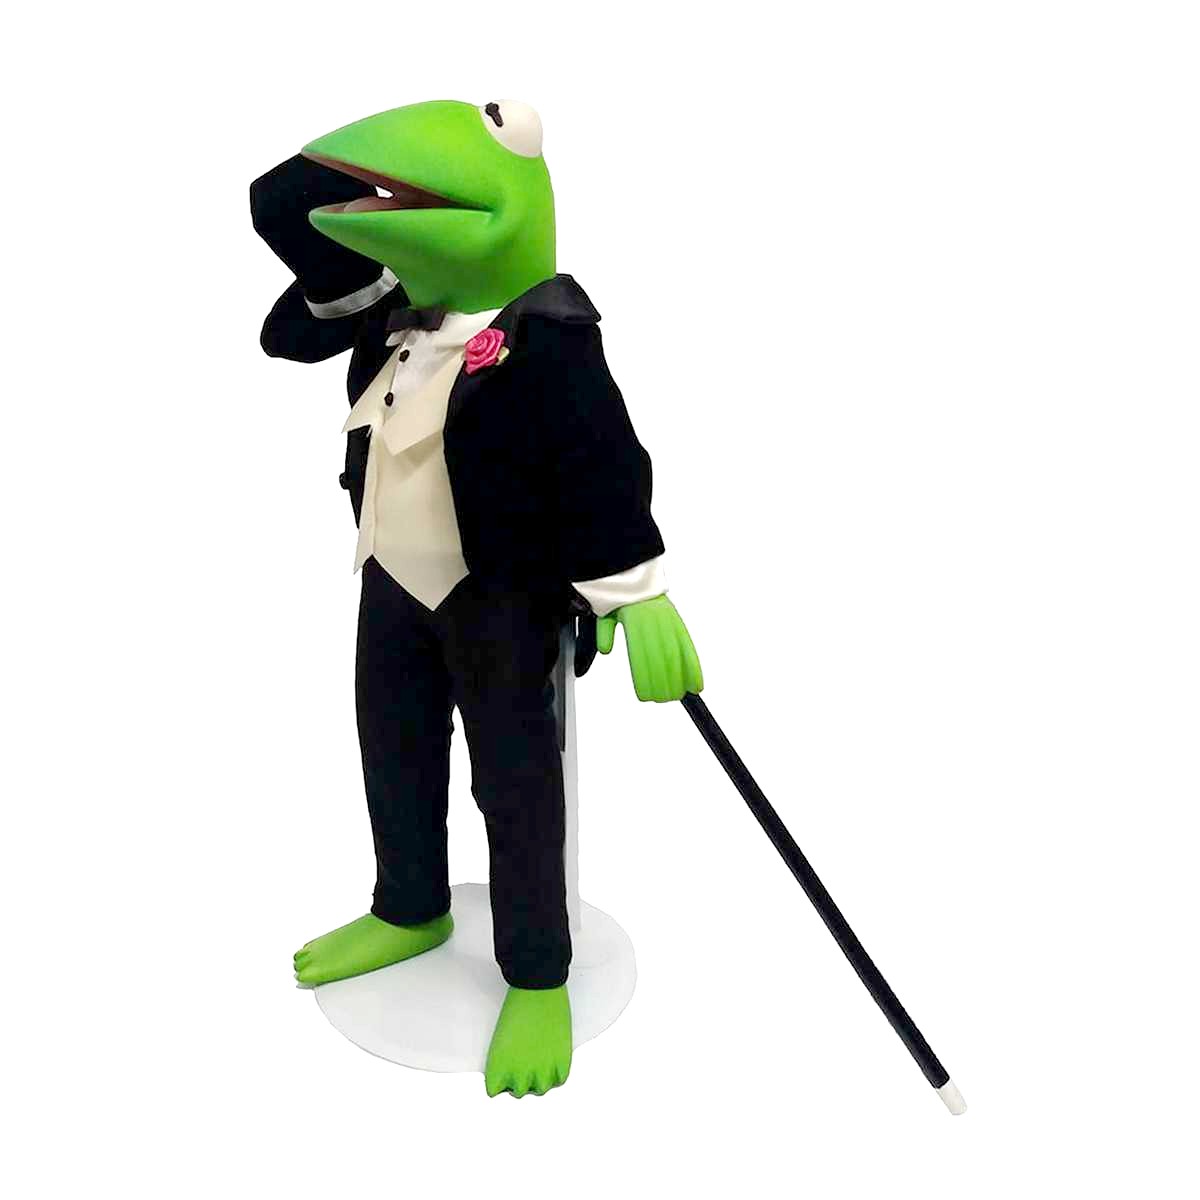 Caco Kermit  (aberto) The Muppet Show 